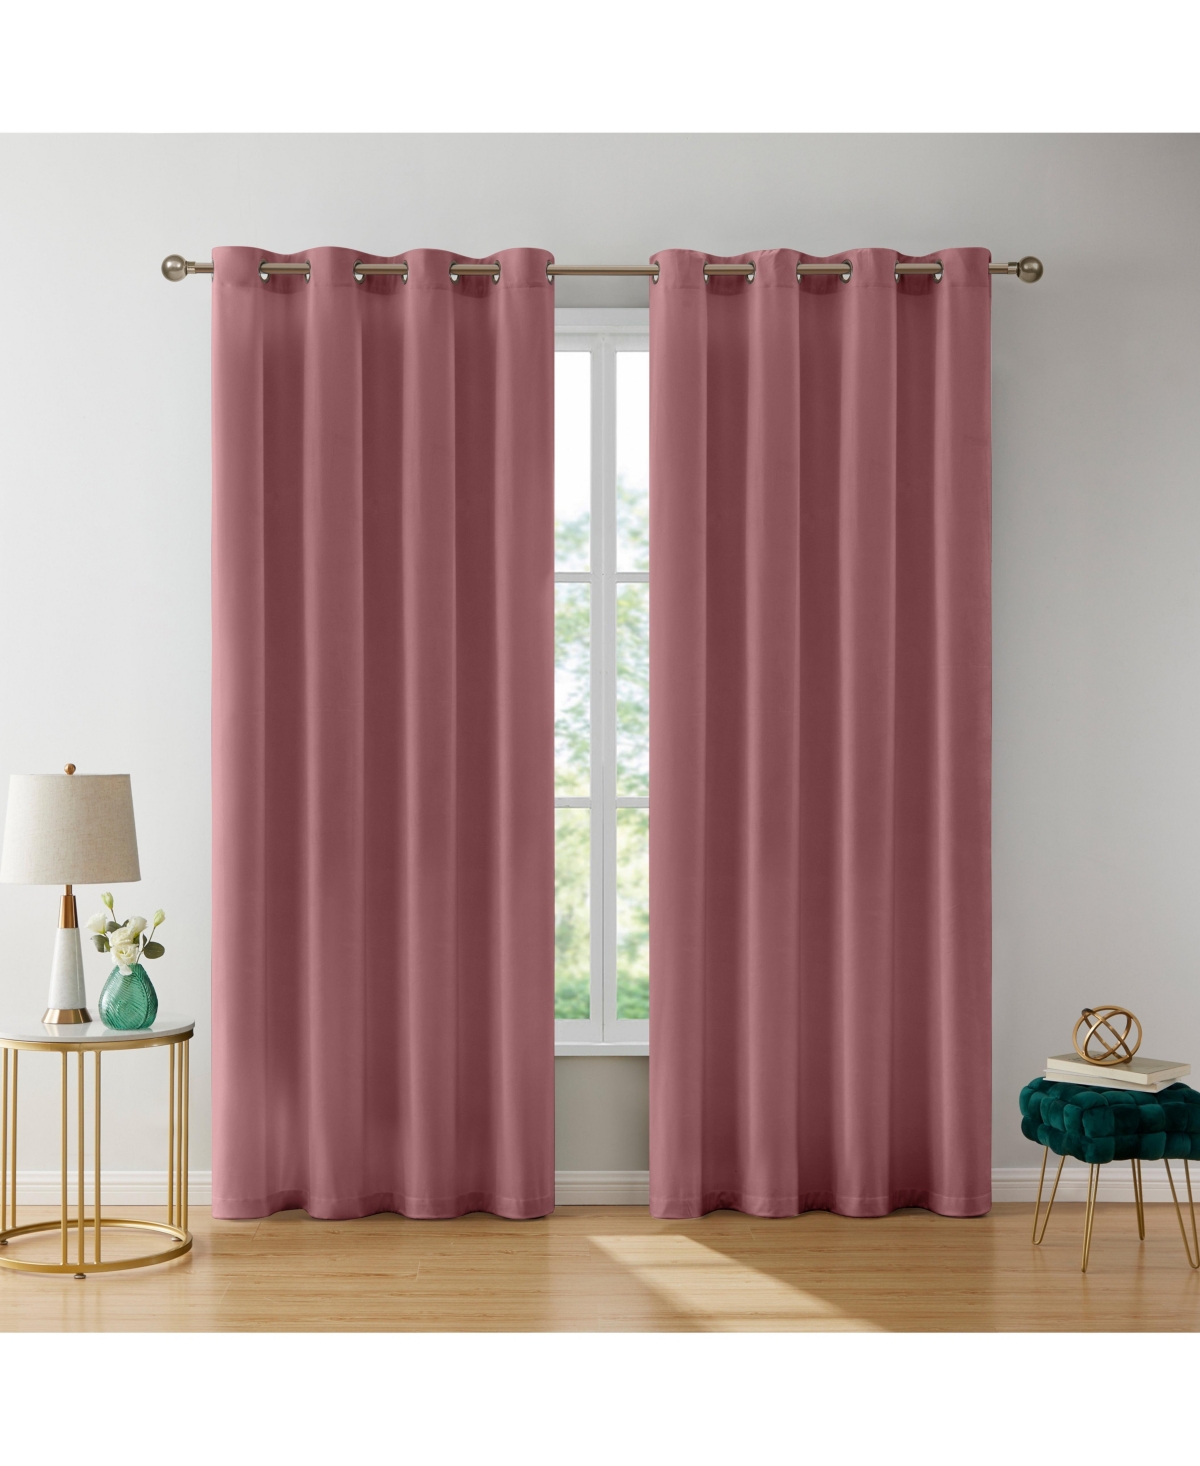 Sawyer Premium Luxurious Lush Velvet Soft Light Filtering Grommet Window Curtains - Set of 2 Panels - Blush pink